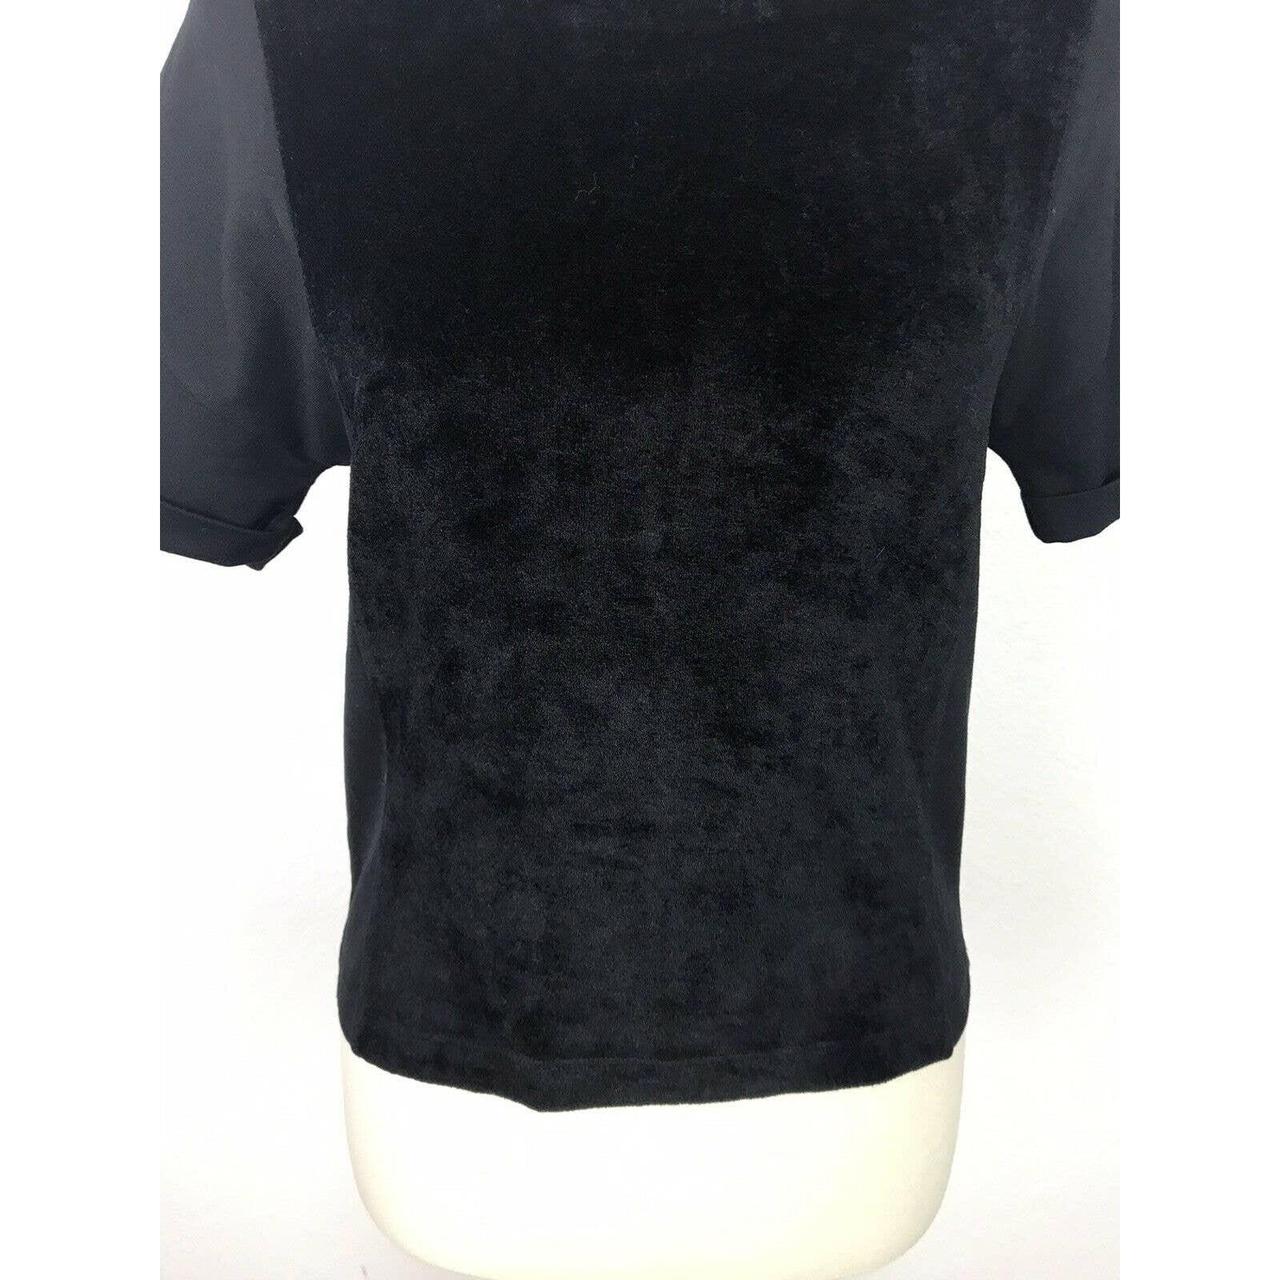 Product Image 3 - Karen Millen Pullover Knit Top

Black

Back Zip

Size